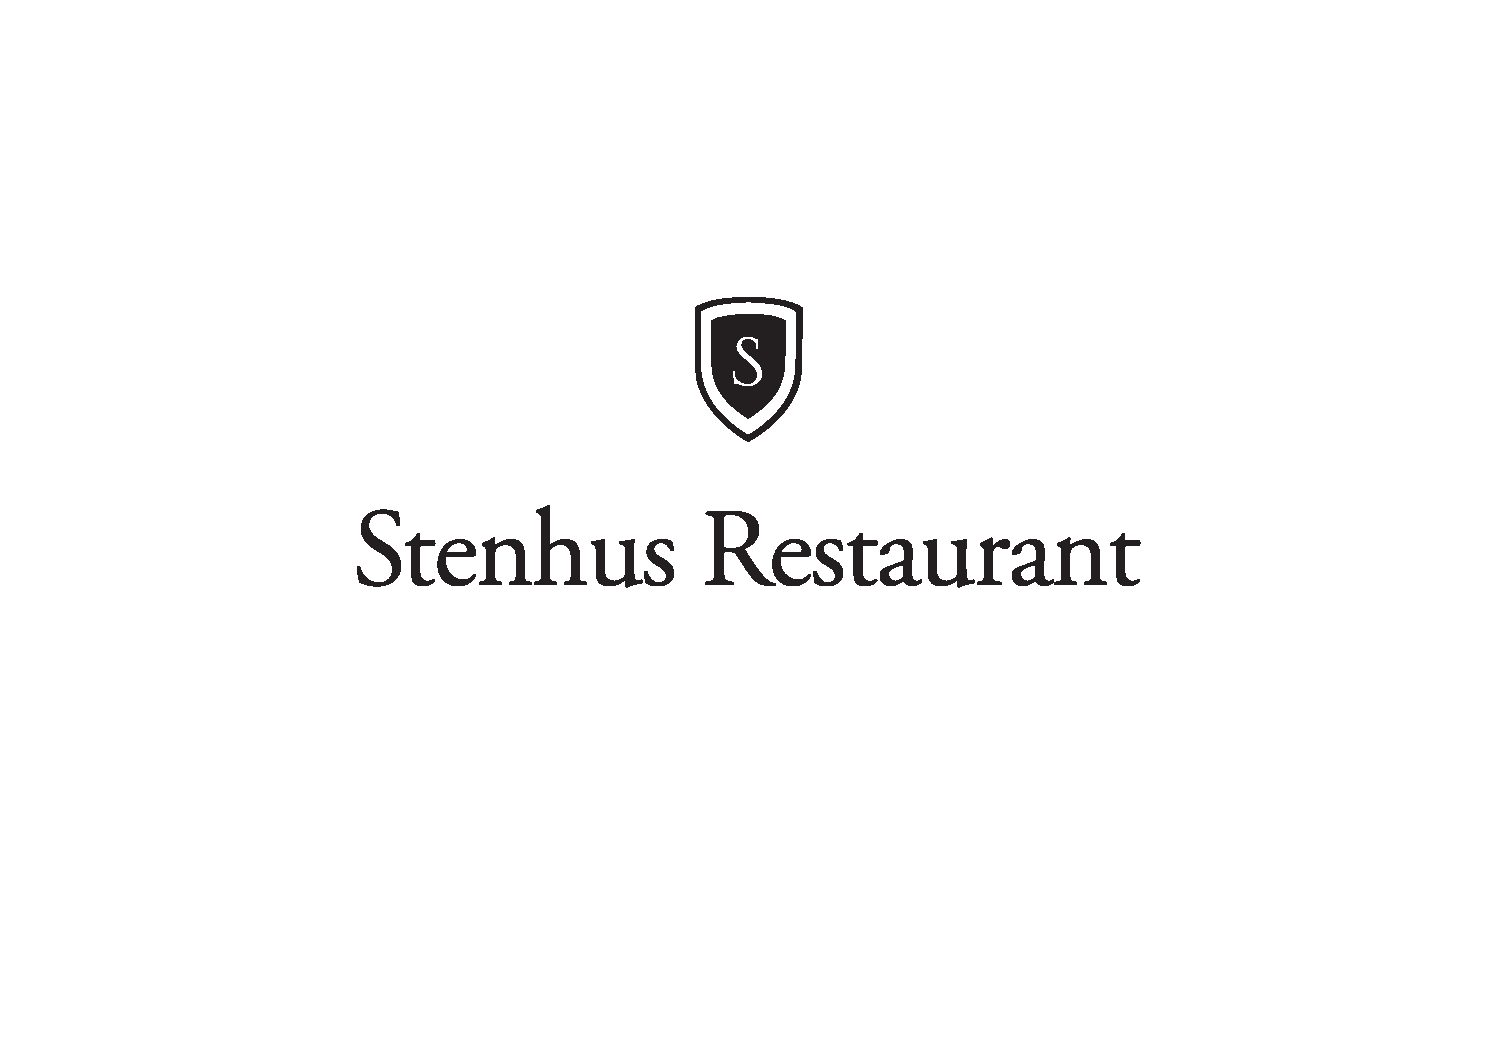 Stenhus